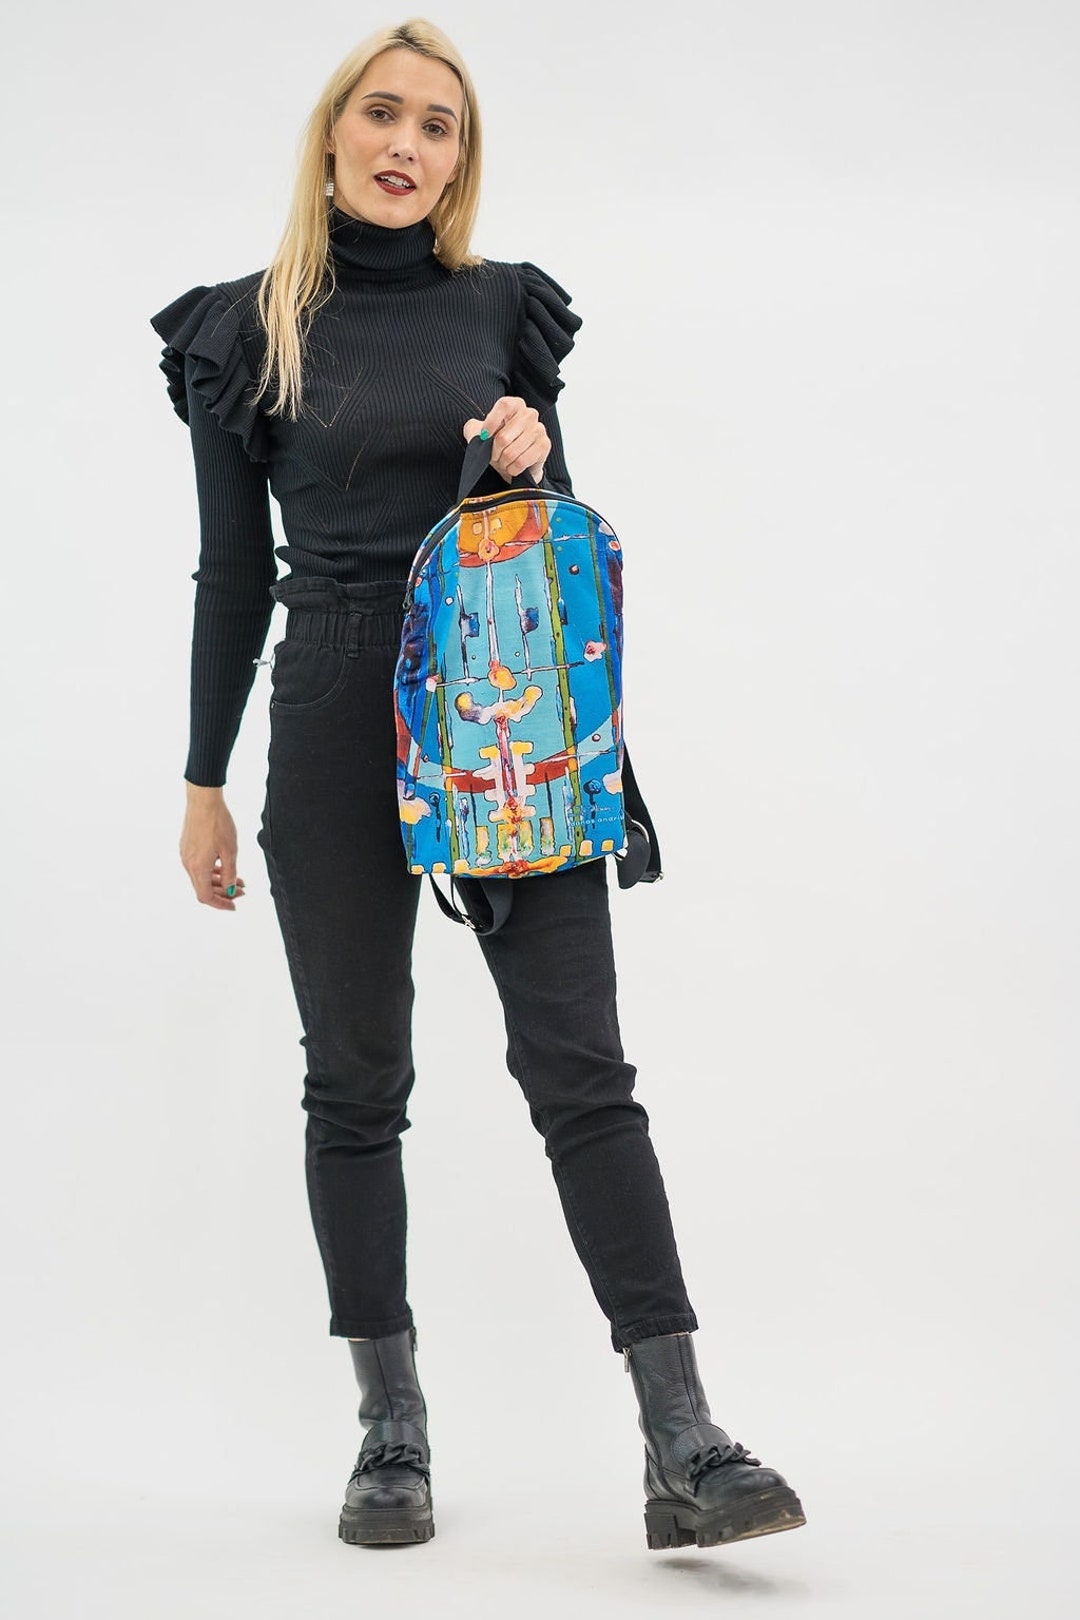 ColourLife Happy Birthday Shoulder Bag Top Handle Tote Bag Handbag for  Women: Handbags